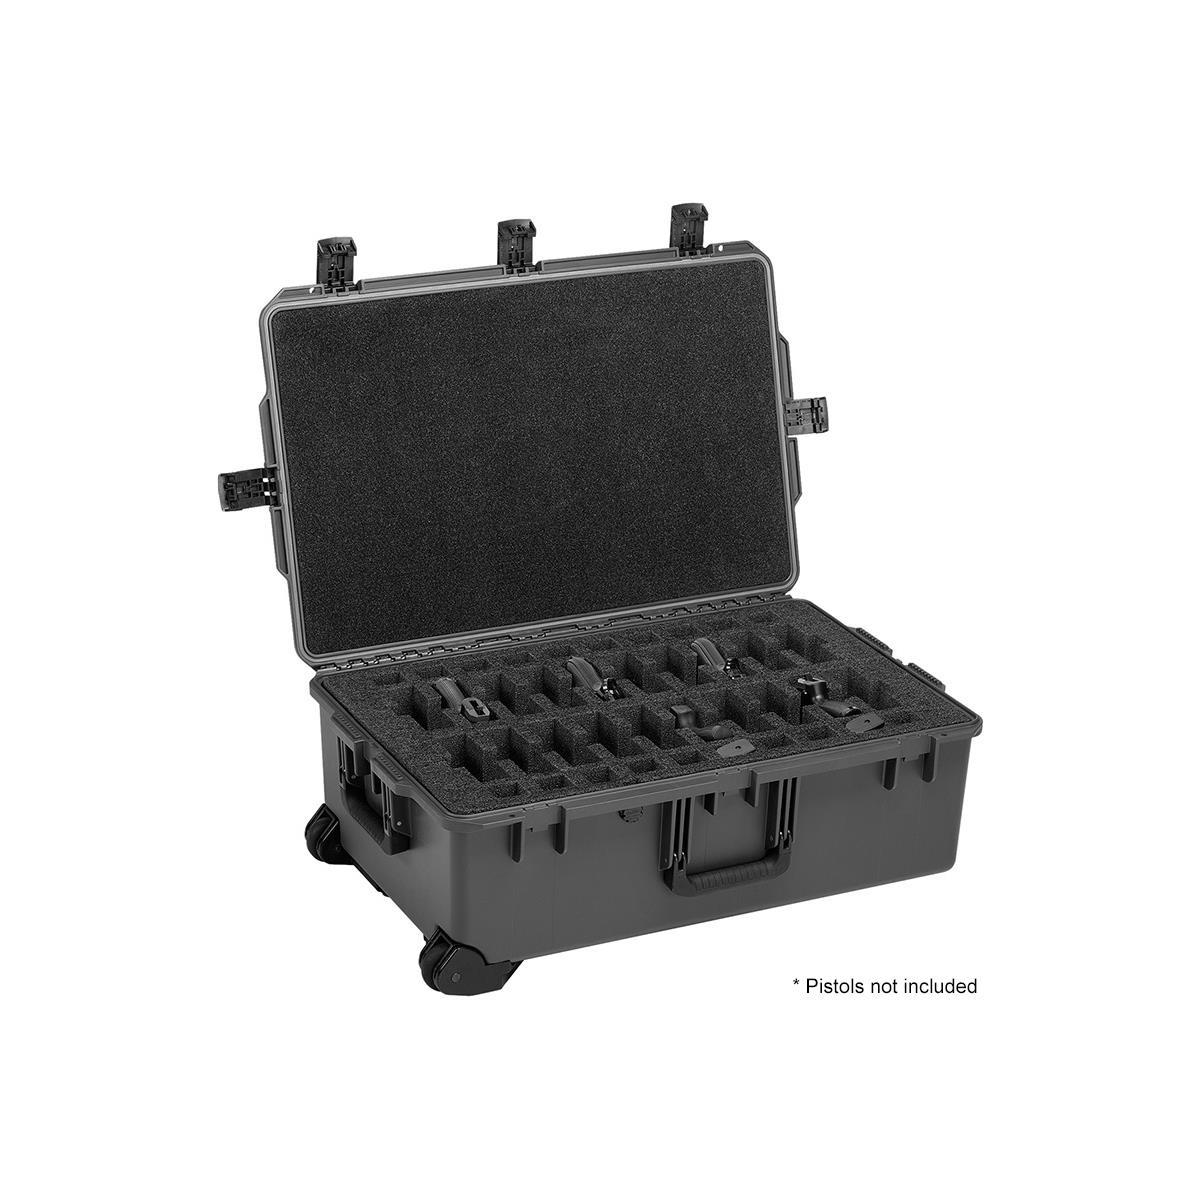 Pelican iM2950 472 Hard Case with Custom Foam for 20x Beretta M9 Pistol, Black -  472-PWC-M9-20-BLK